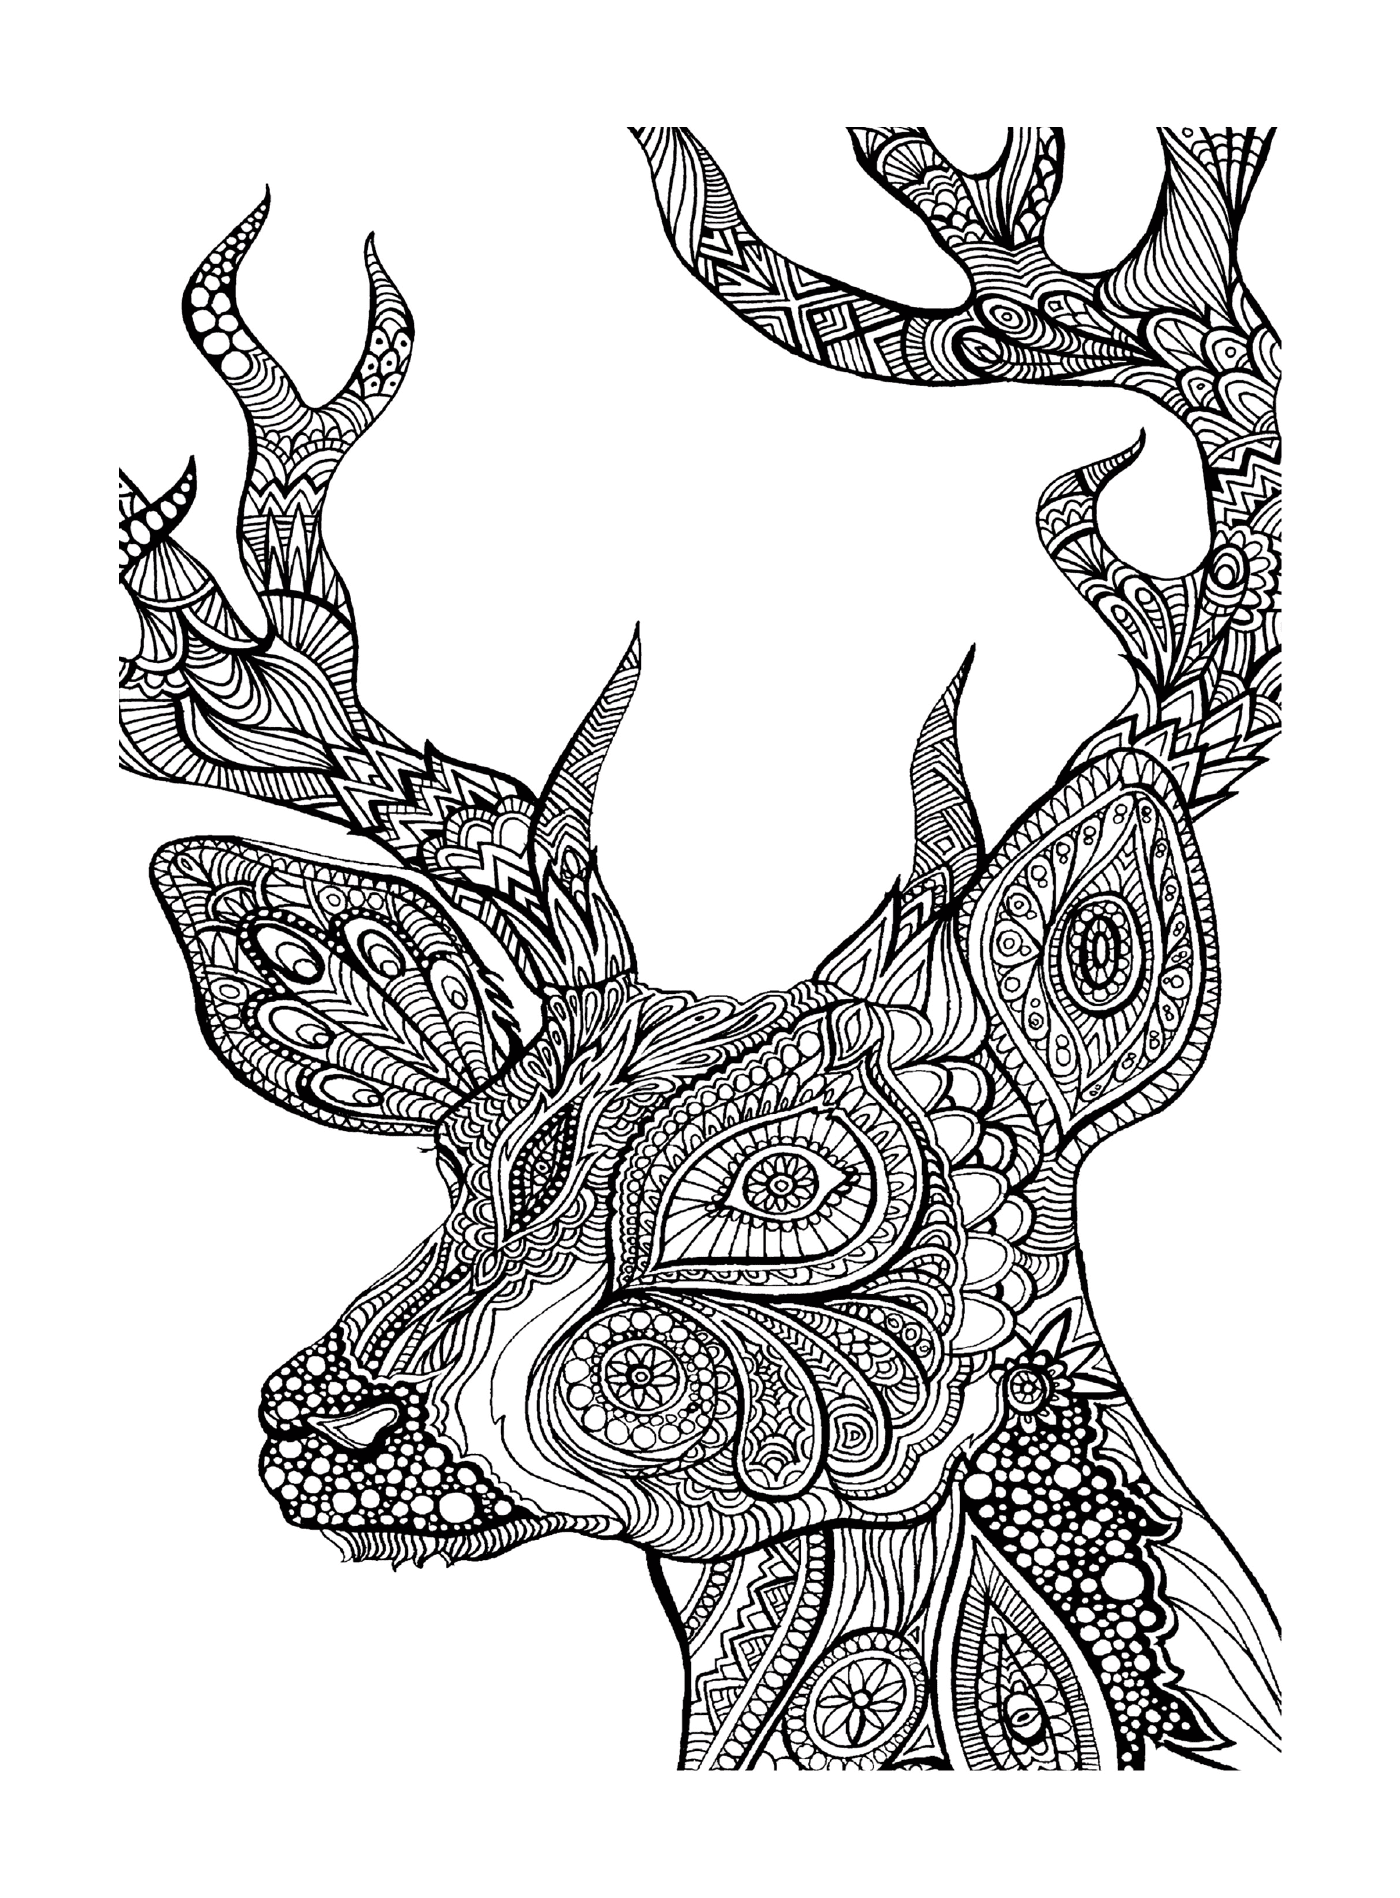  The head of a deer 